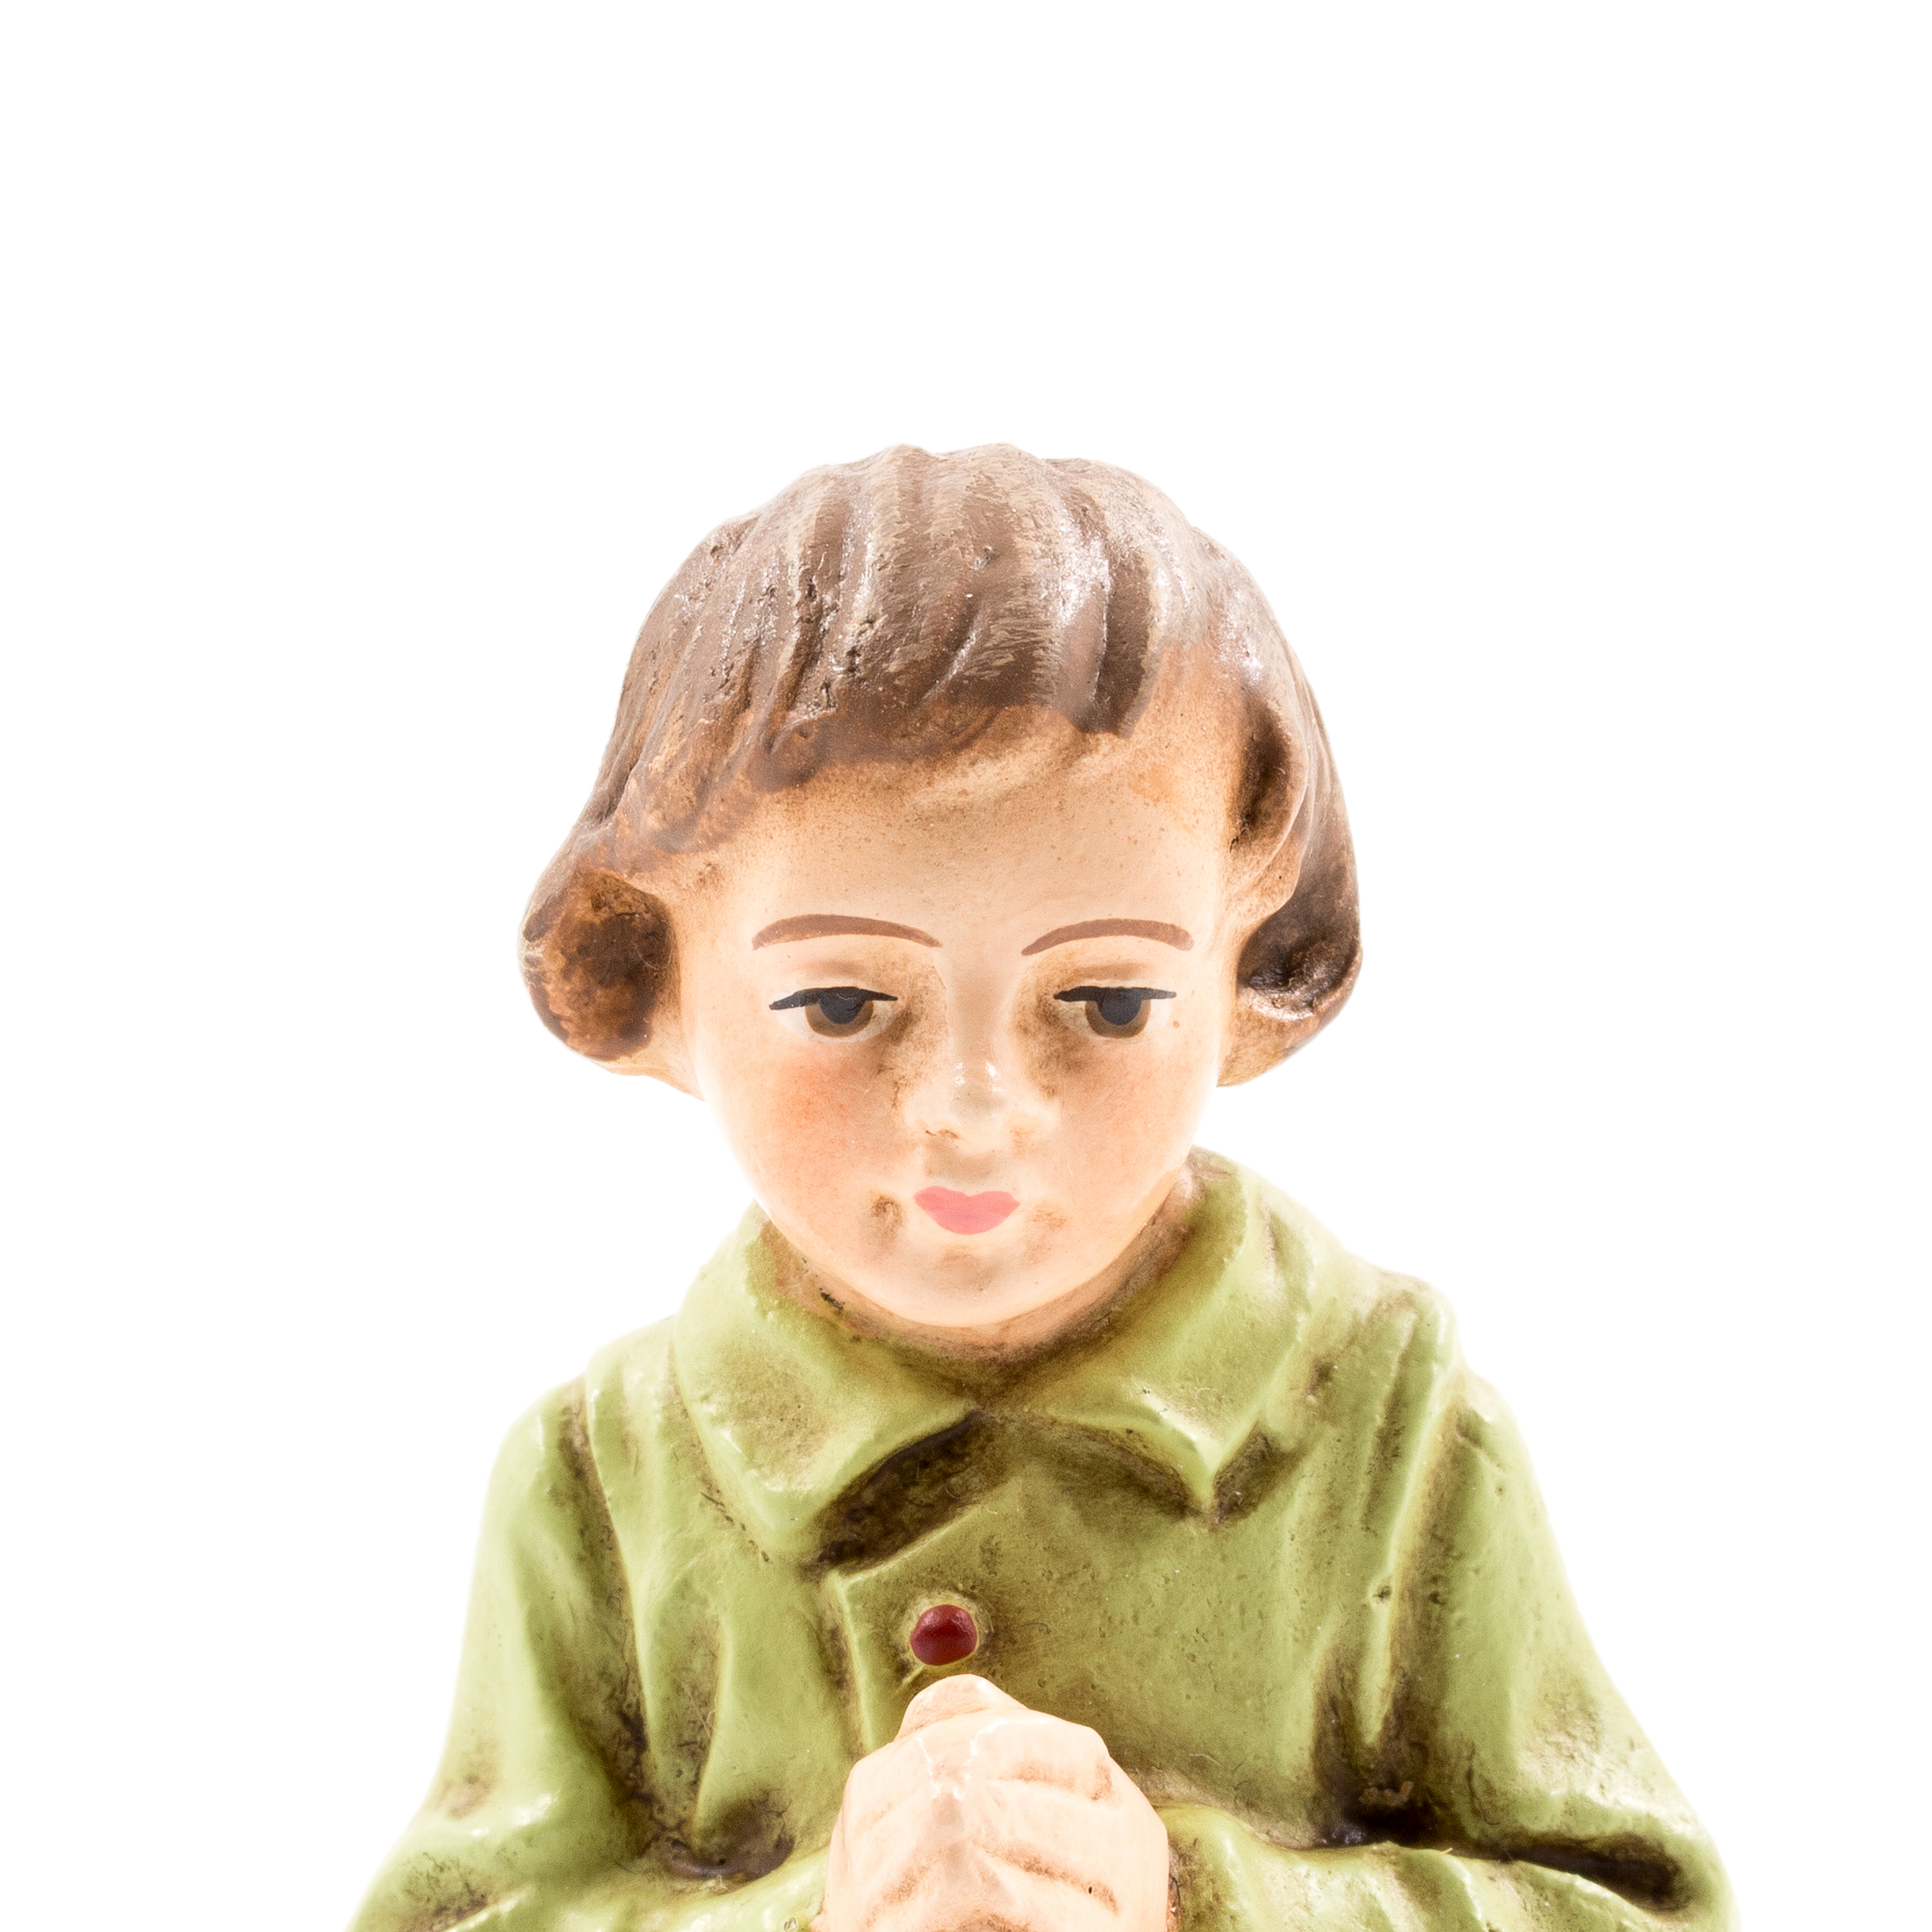 Praying shepherd boy, to 6.75 in. figures - Marolin Nativity figure - made in Germany